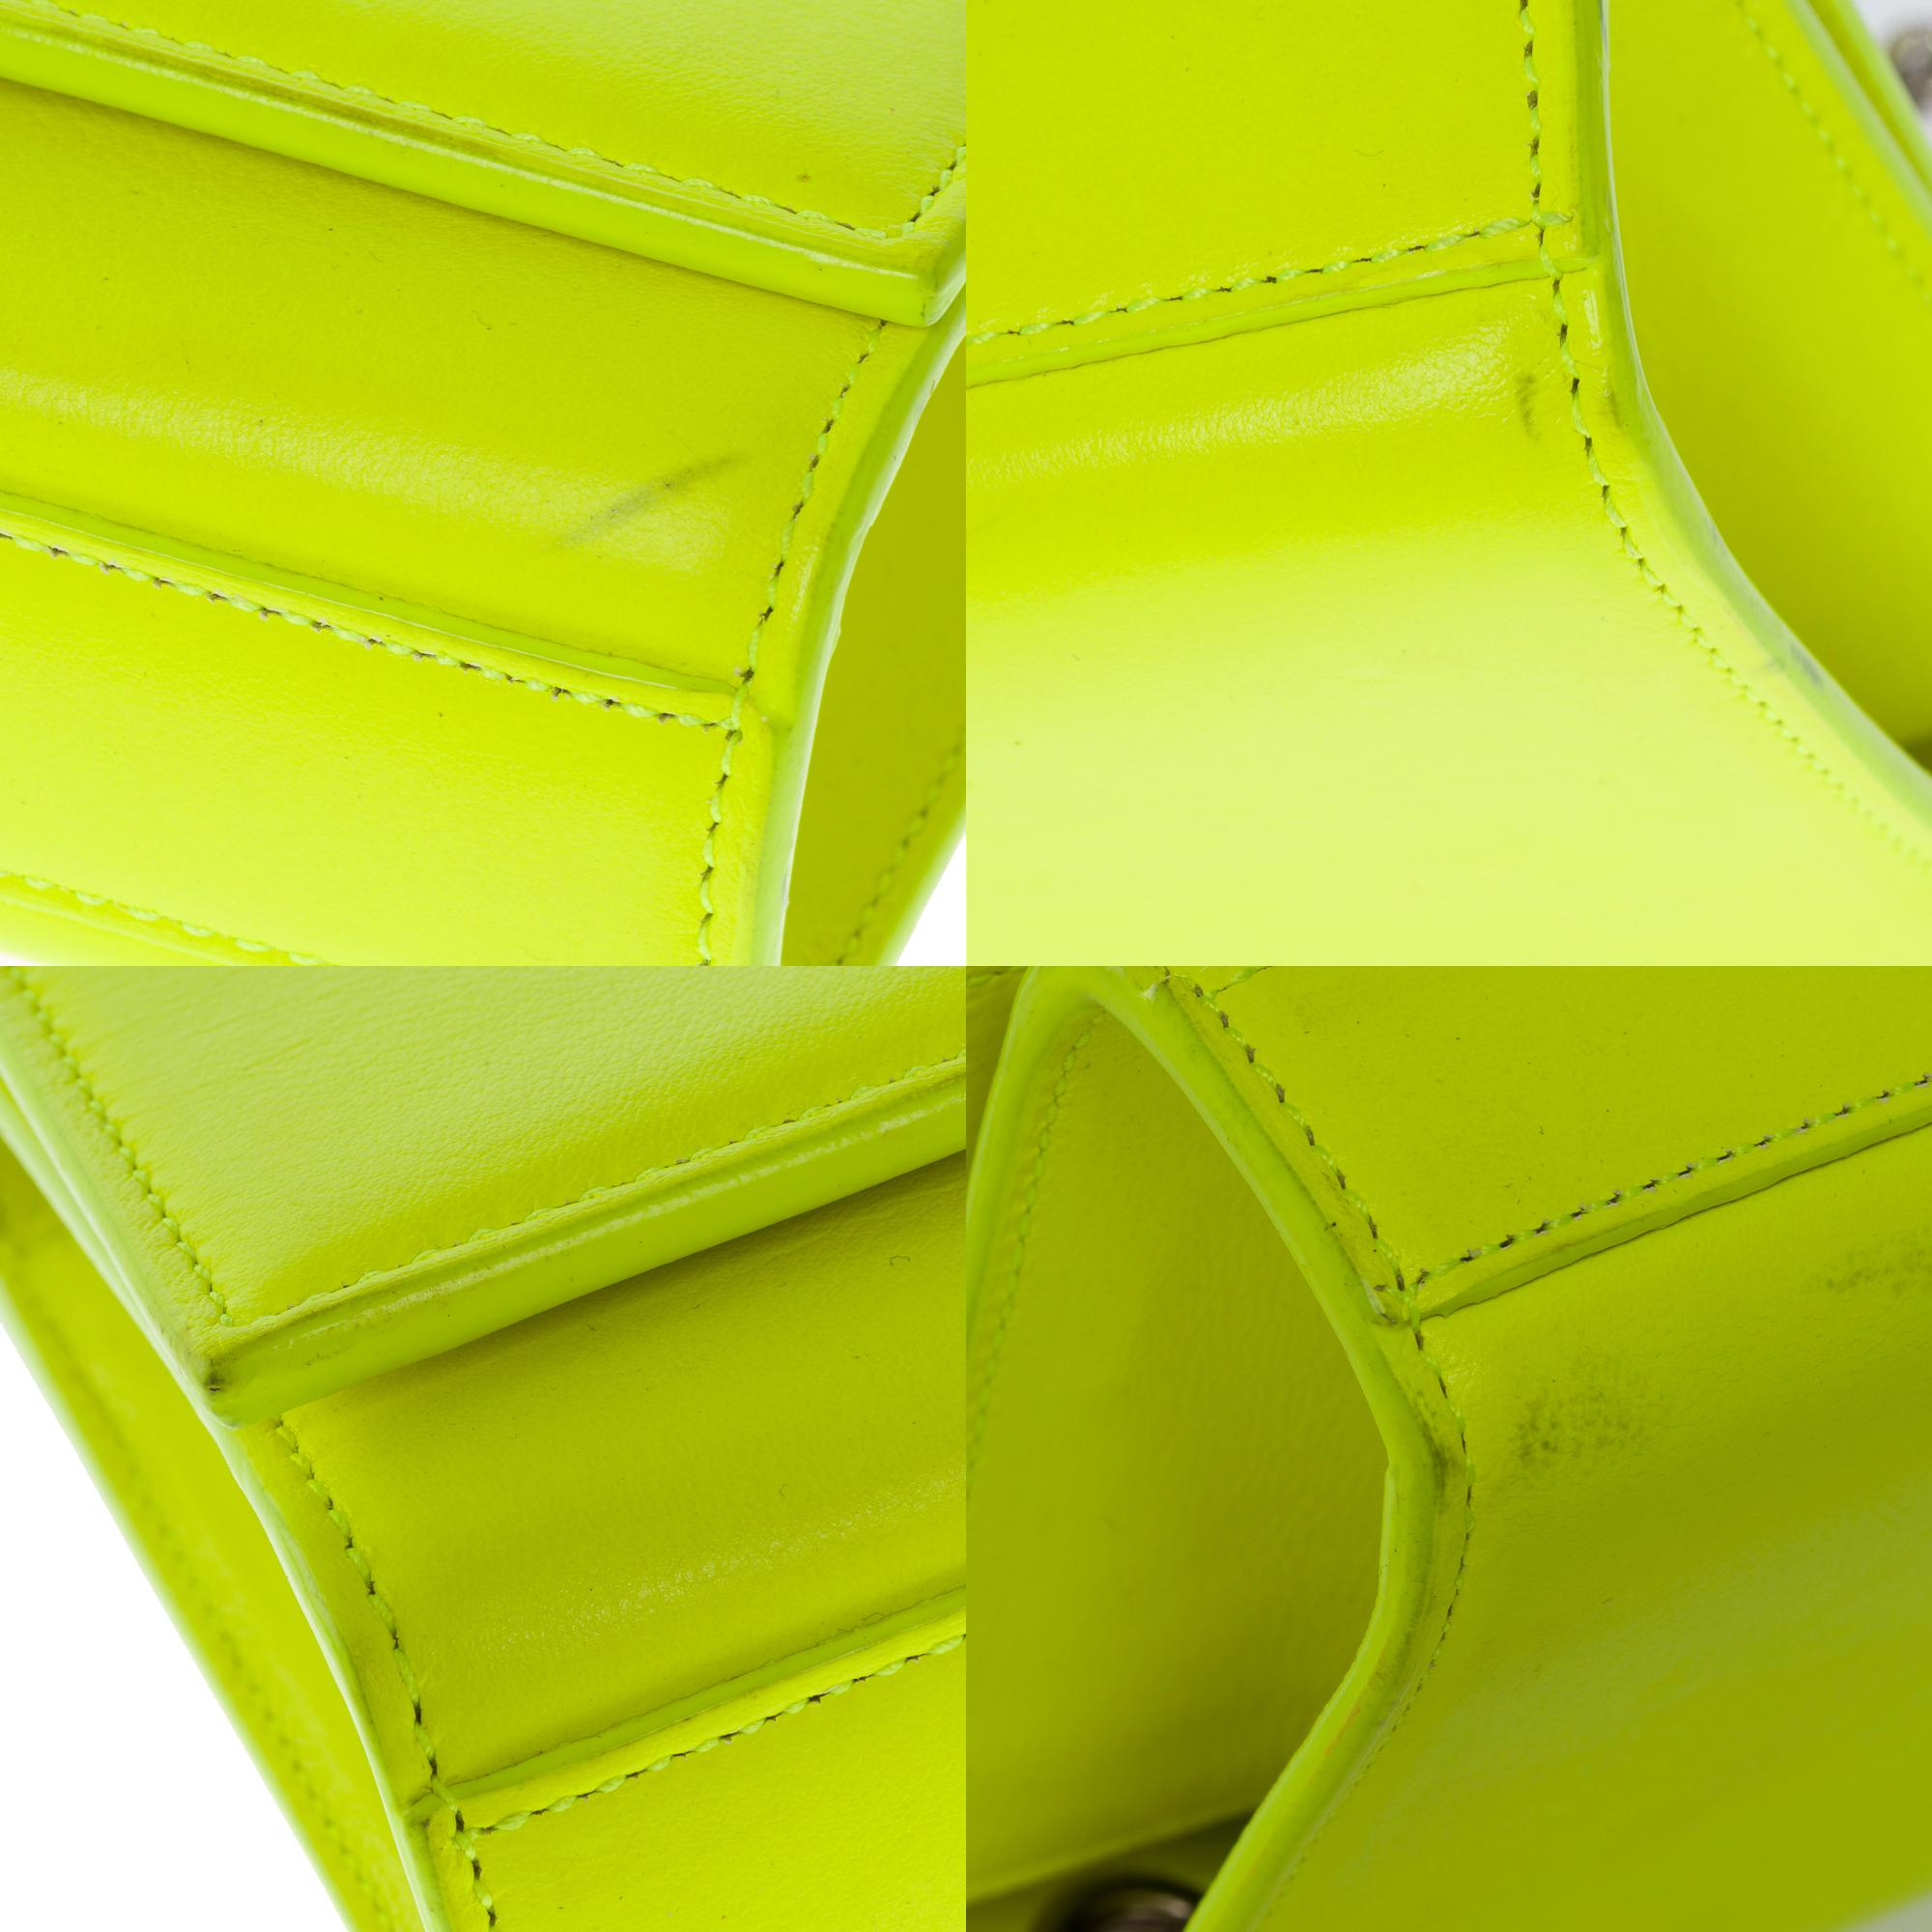 Exquisite Saint Laurent Kate shoulder bag in neon yellow leather, SHW 2